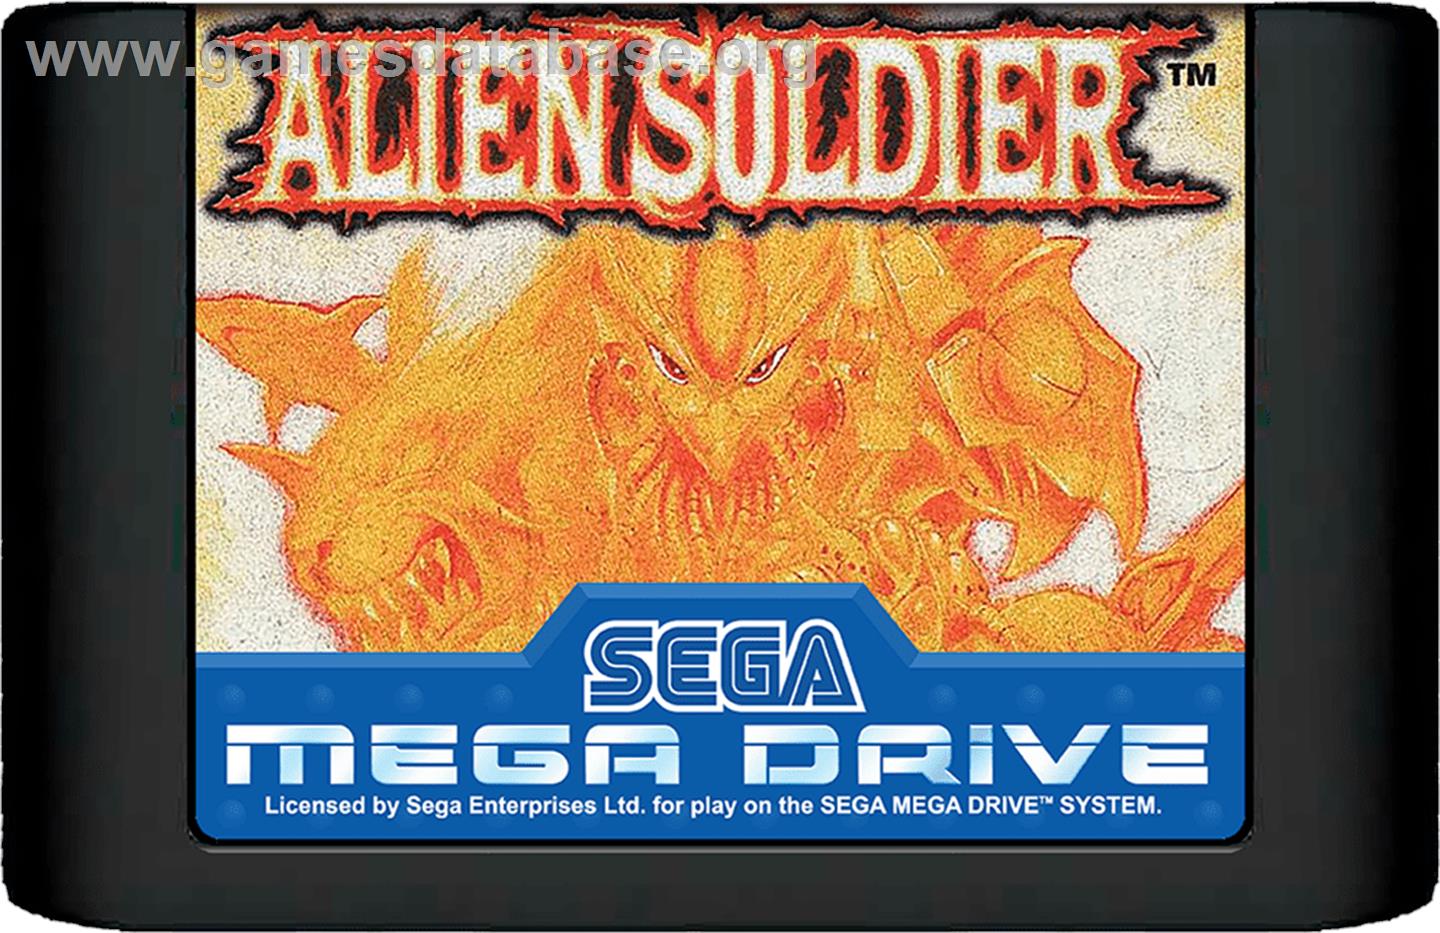 Alien Soldier - Sega Genesis - Artwork - Cartridge